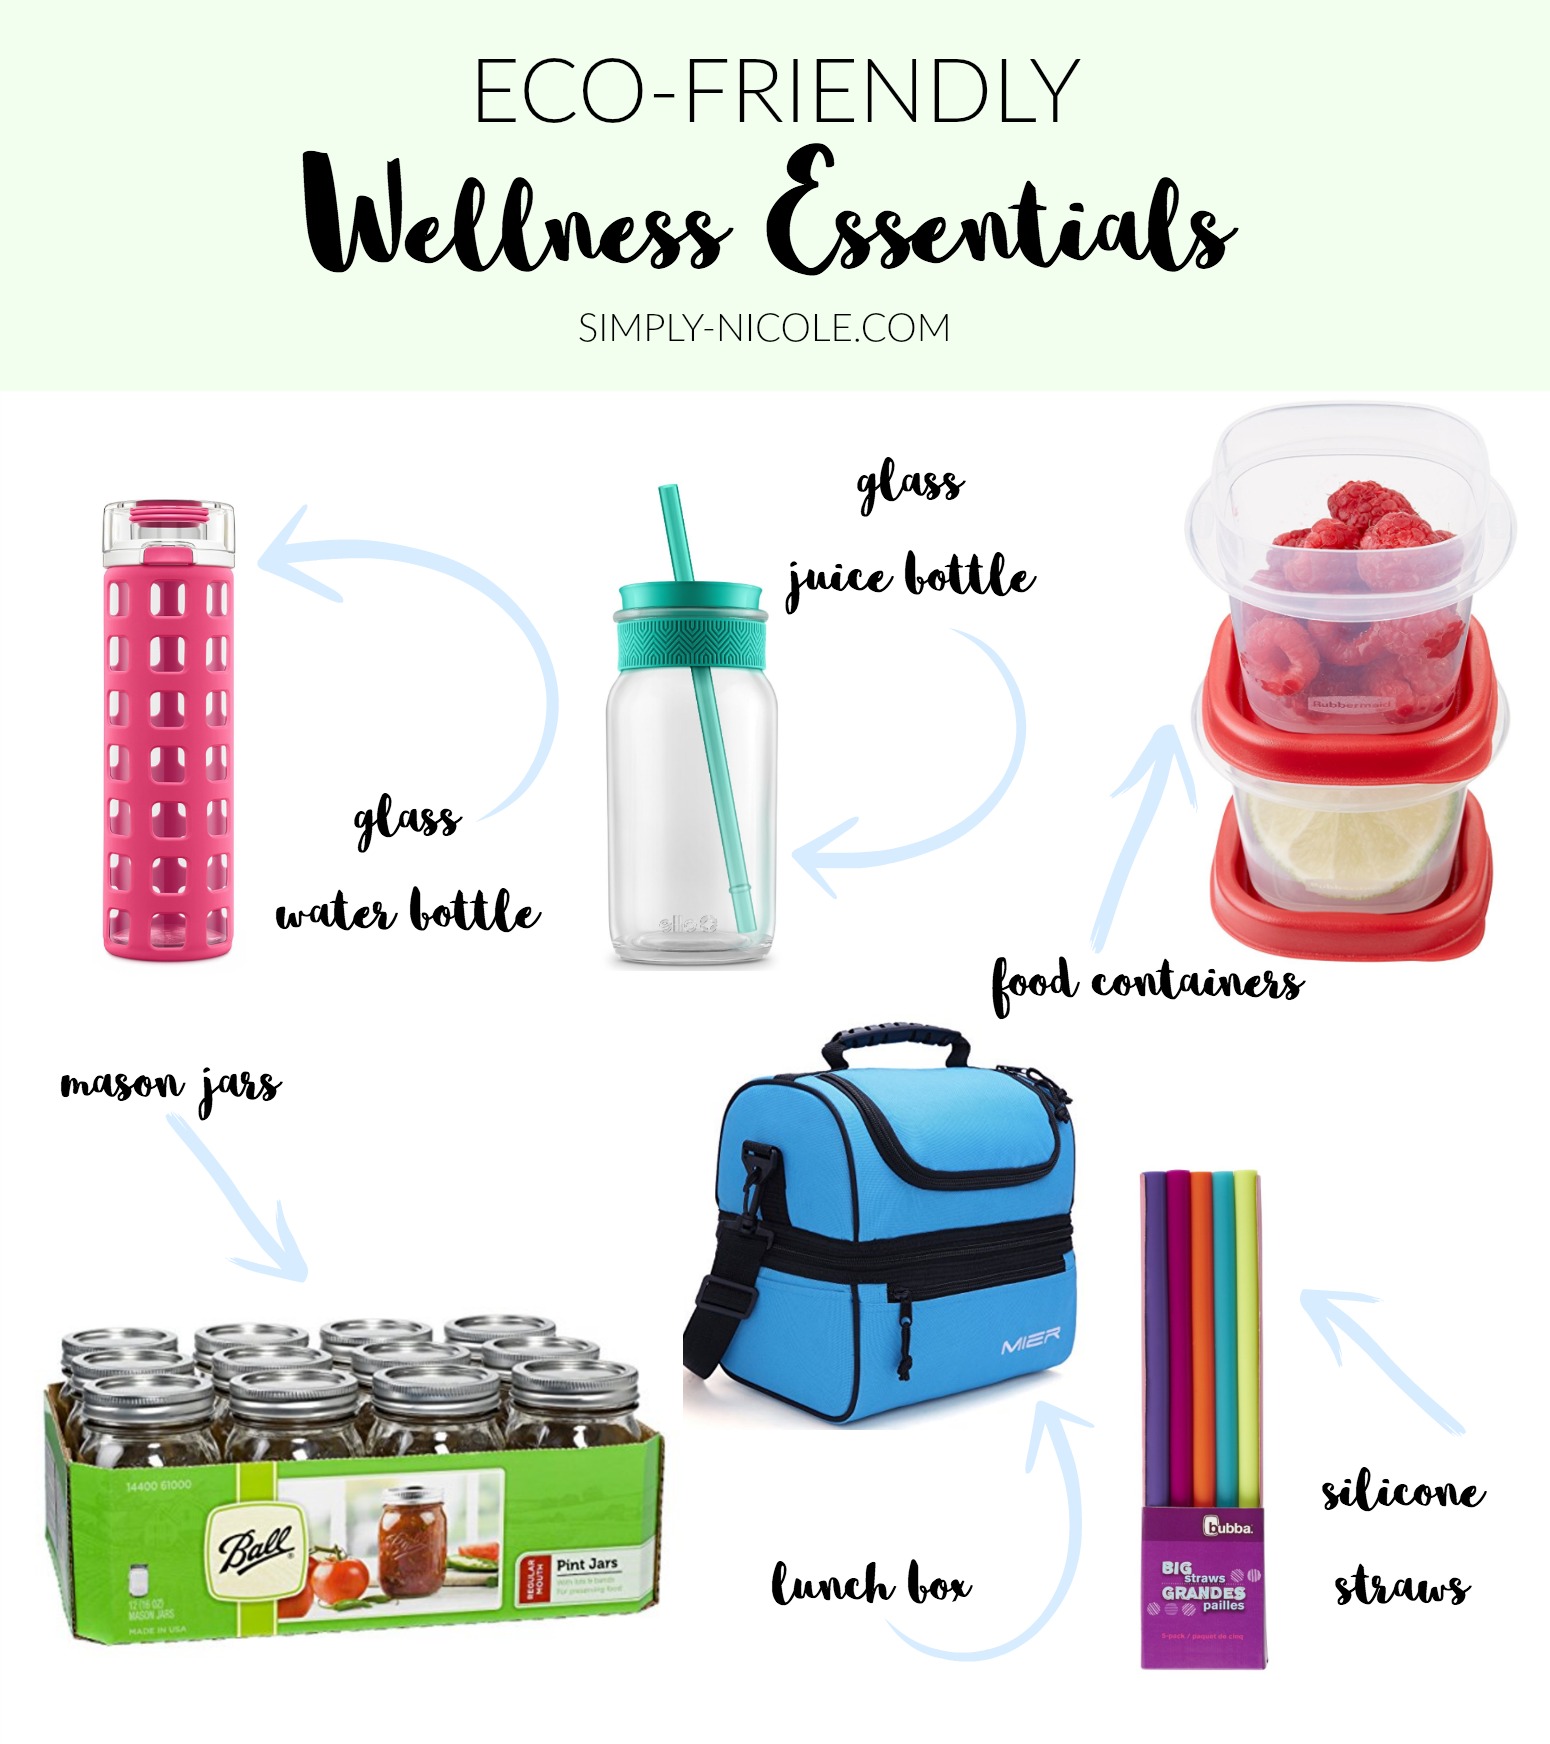 Eco-friendly wellness essentials on Simply Nicole 